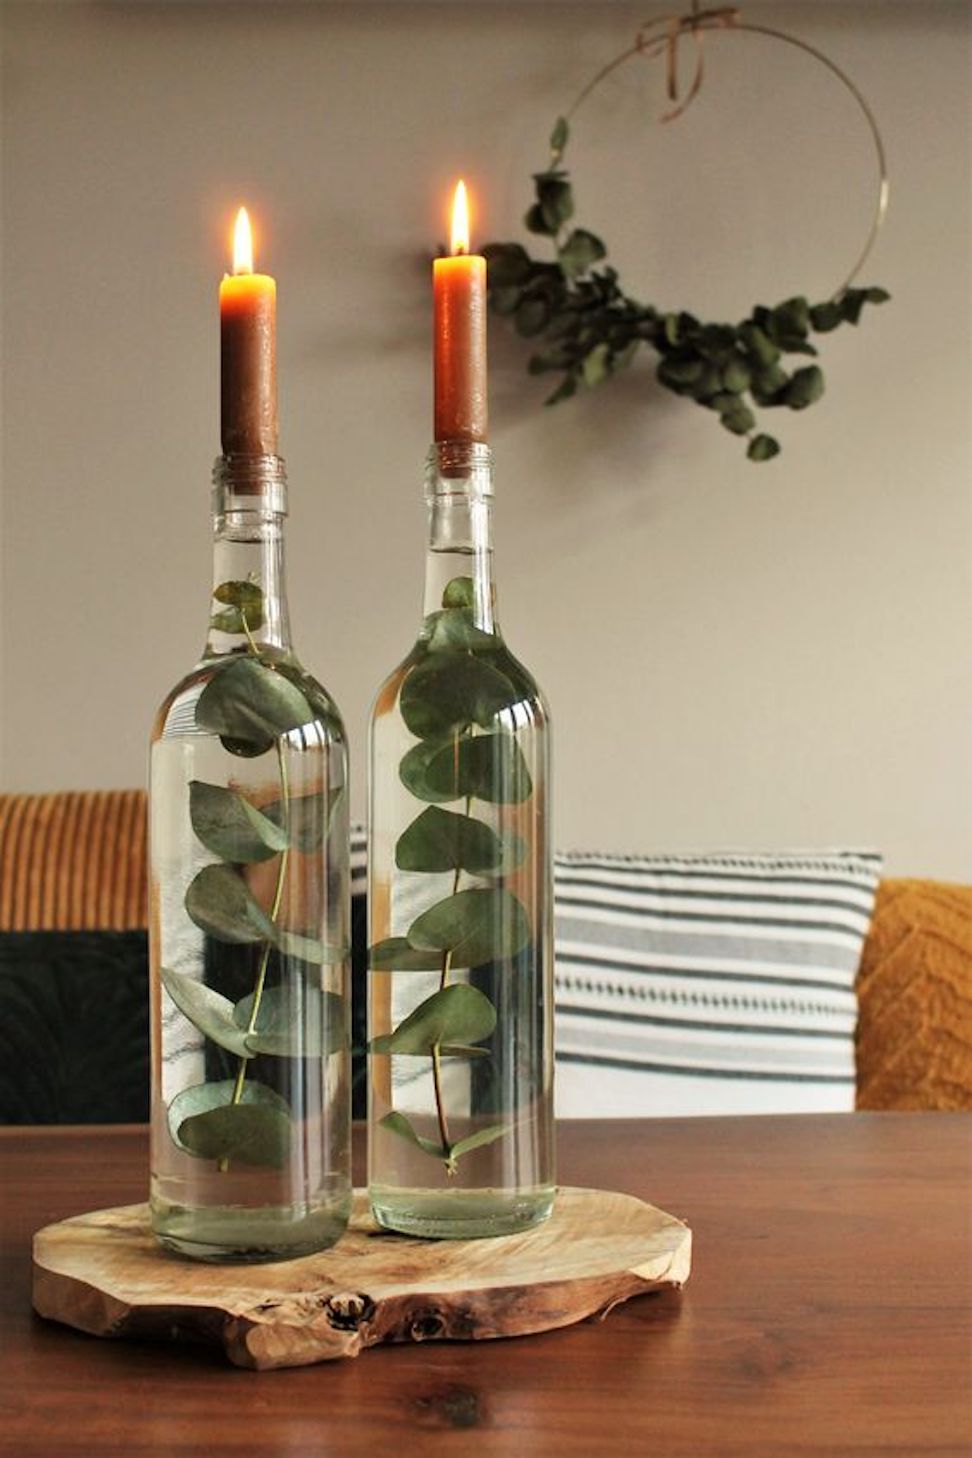 Simple Wine Glass & Candle Center Piece - Do-It-Yourself Fun Ideas